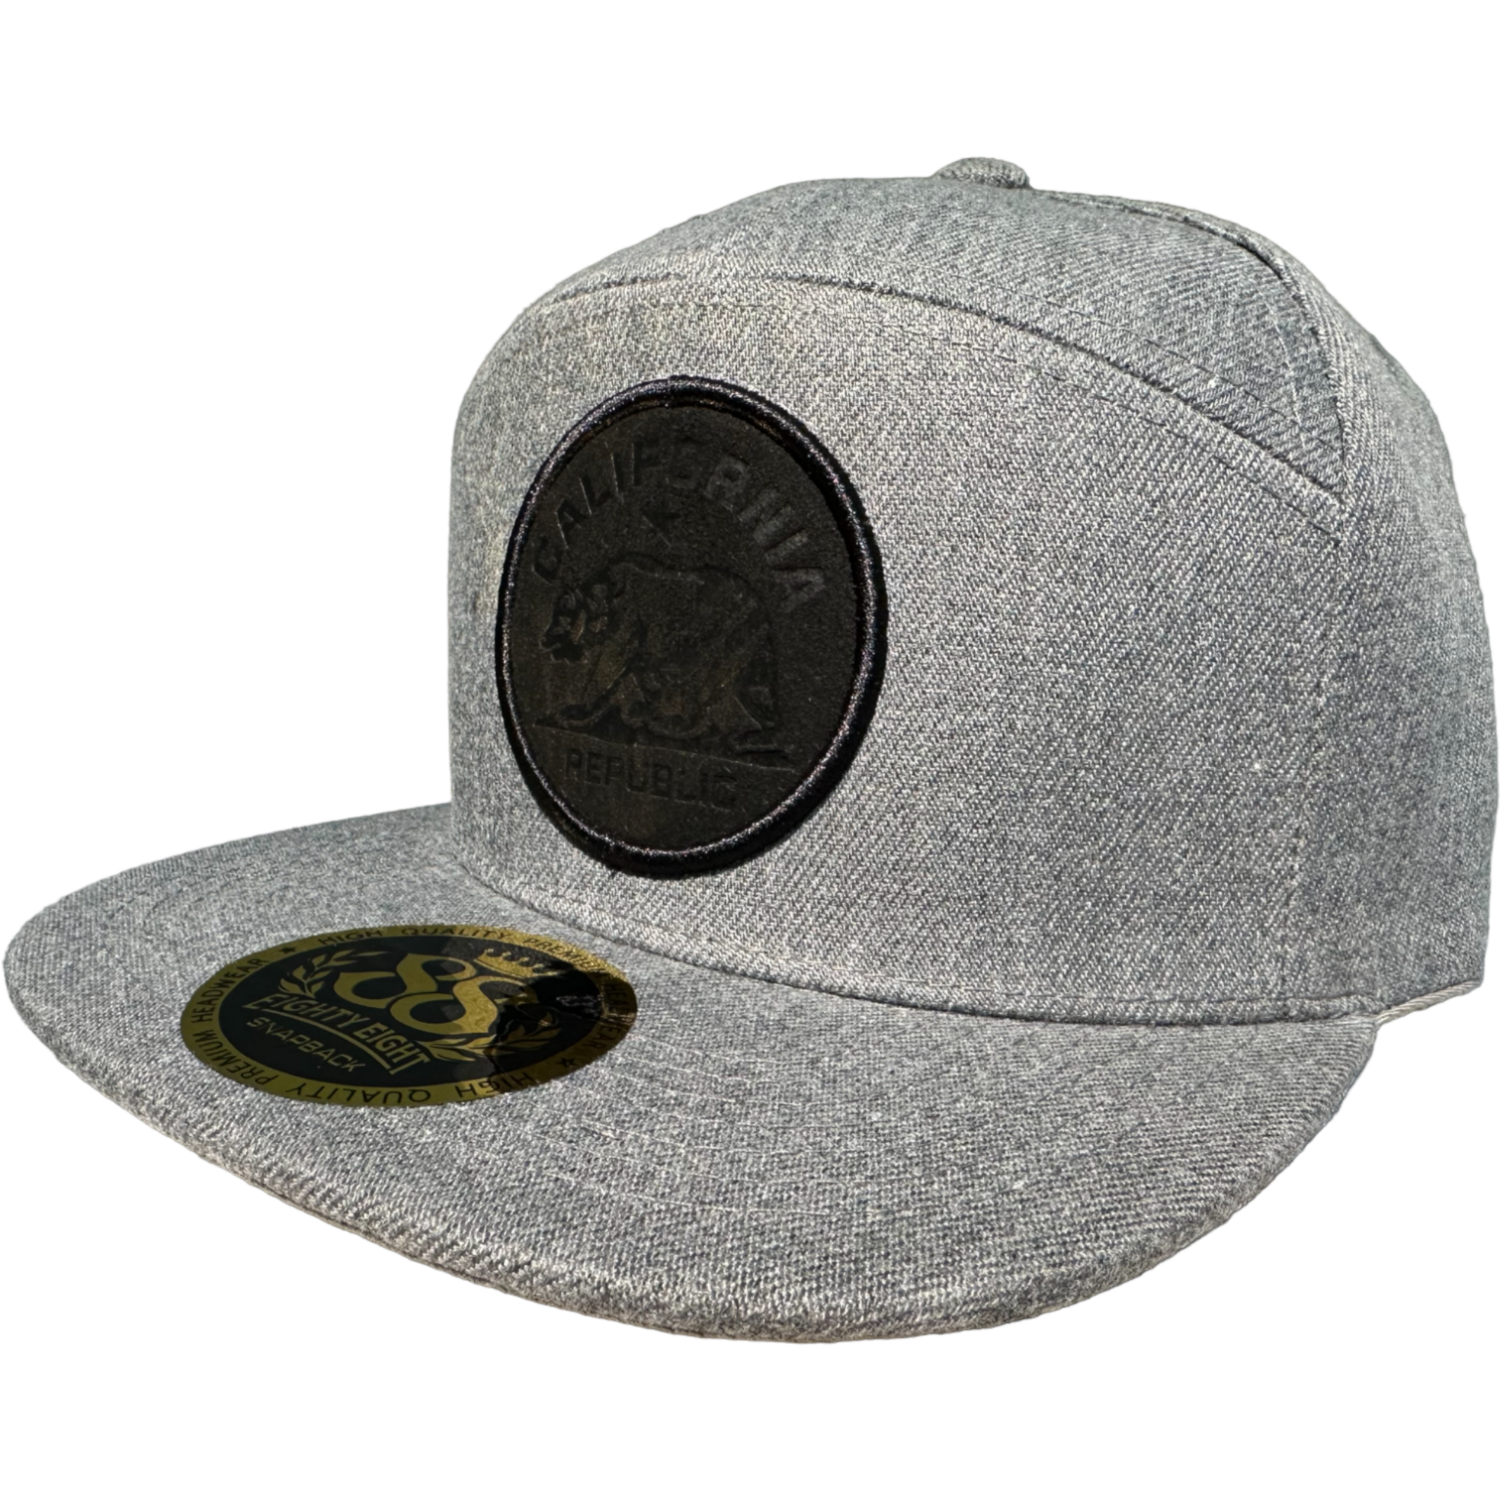 California Republic Black Patch Snapback 6 Panel Adjustable Snap Fit Hat